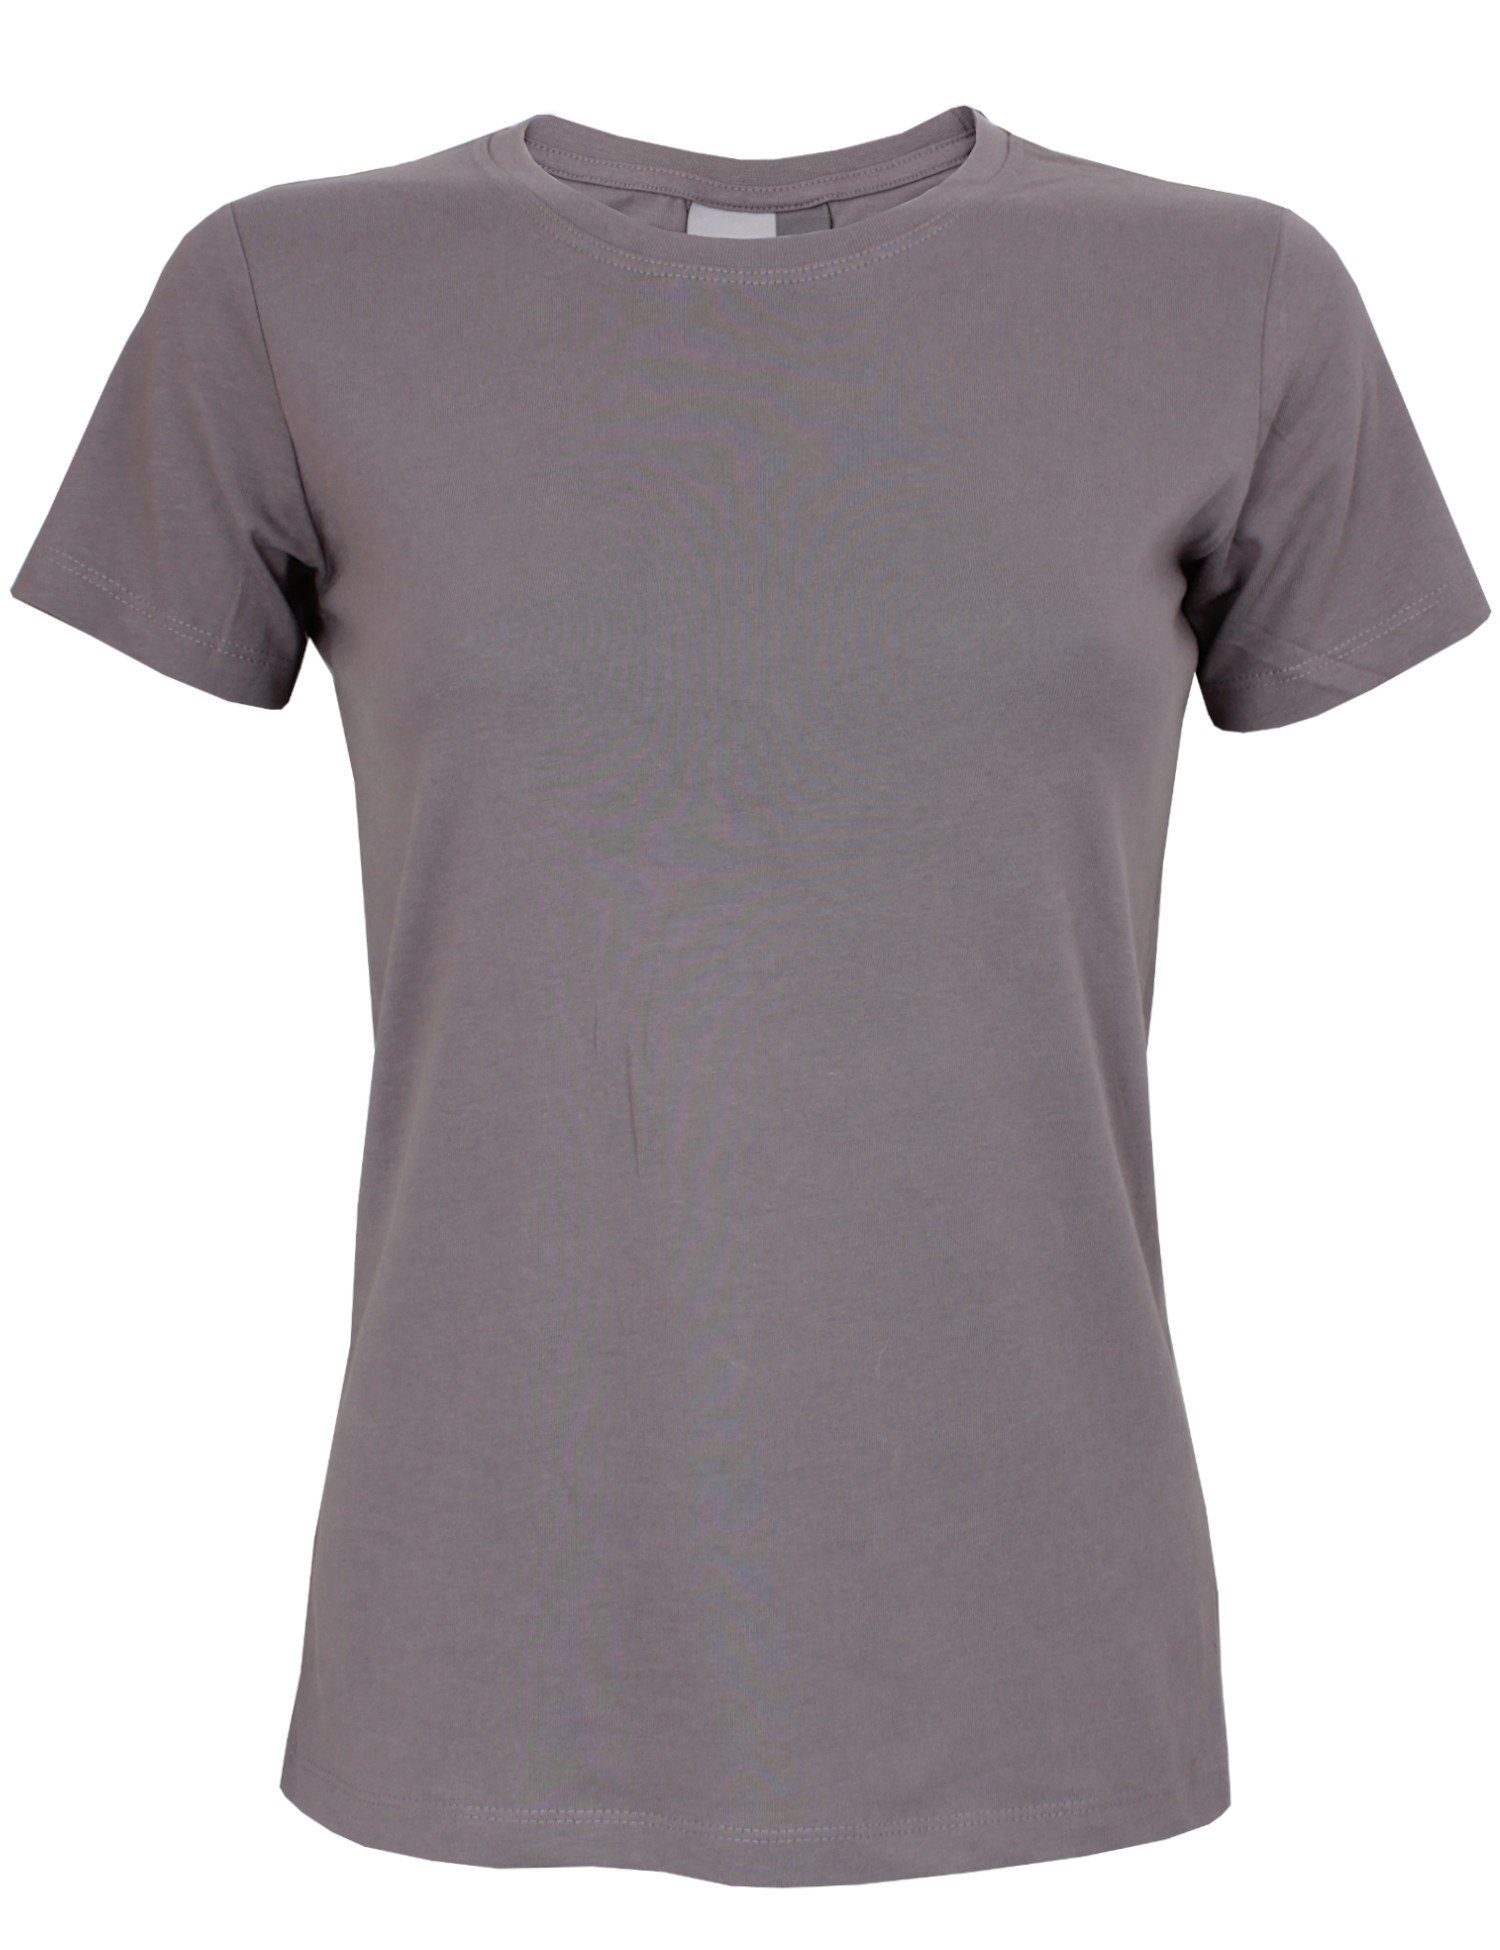 Promodoro Rundhalsshirt Women’s Premium-Shirt Unifarben light grey